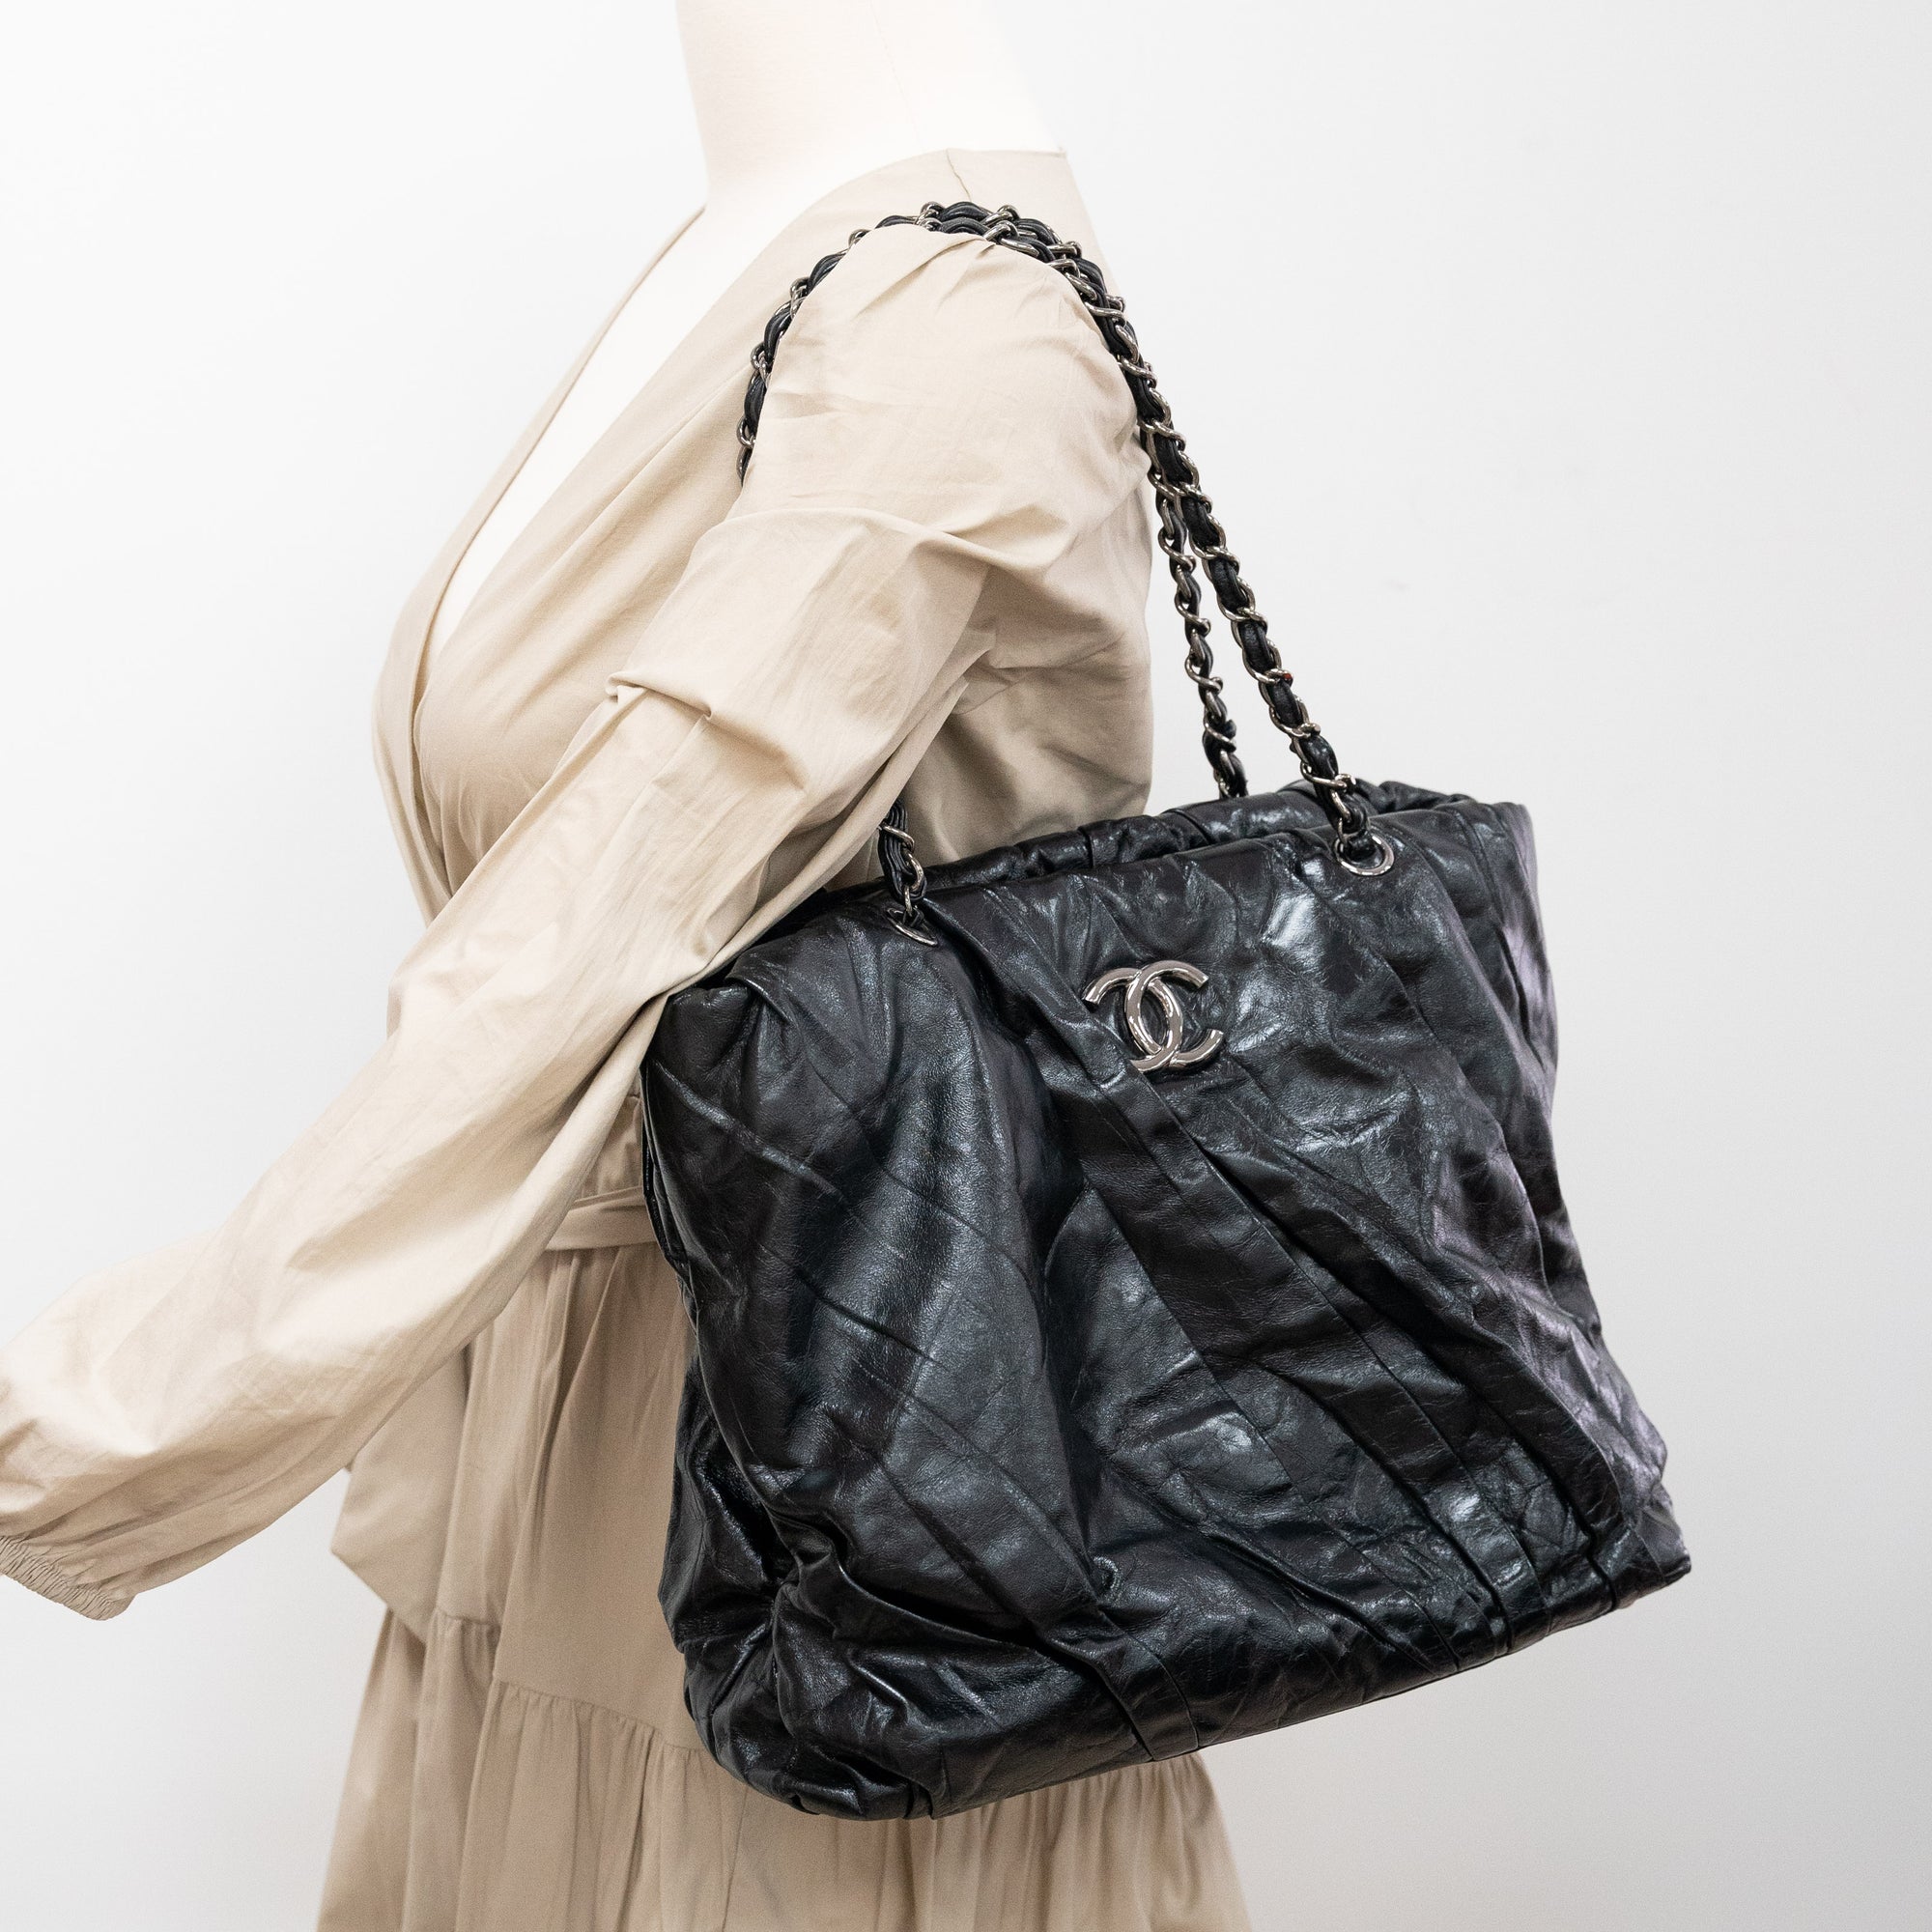 Chanel Tote Bag Black - The Purse Affair